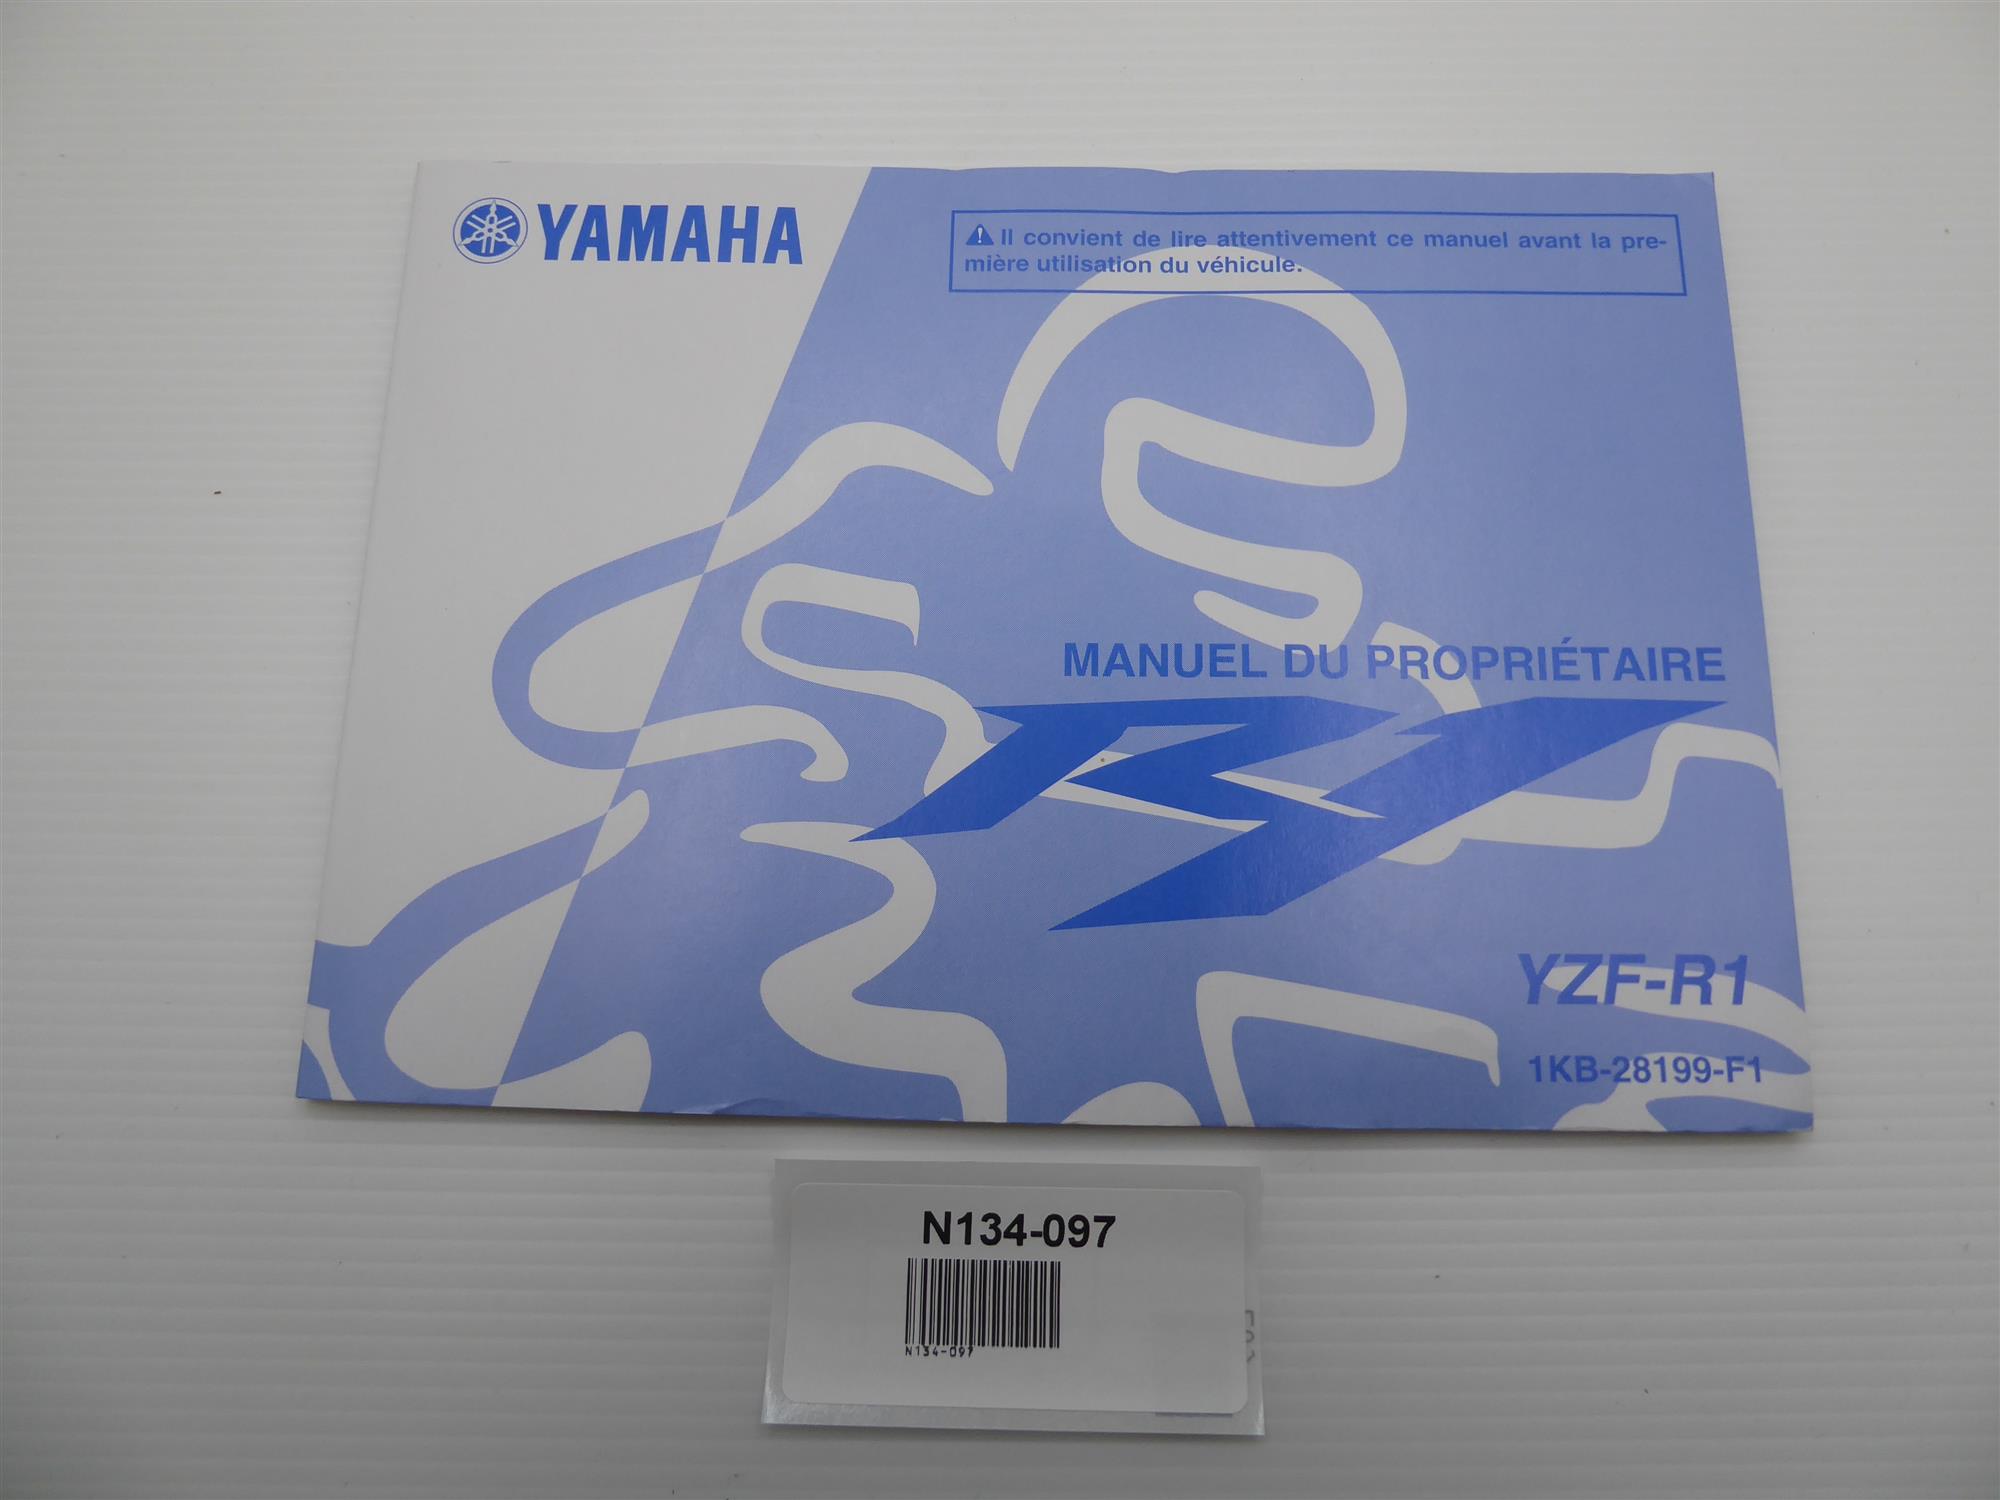 Yamaha YZF R1 manuel del propietario 1KB-28199-F1